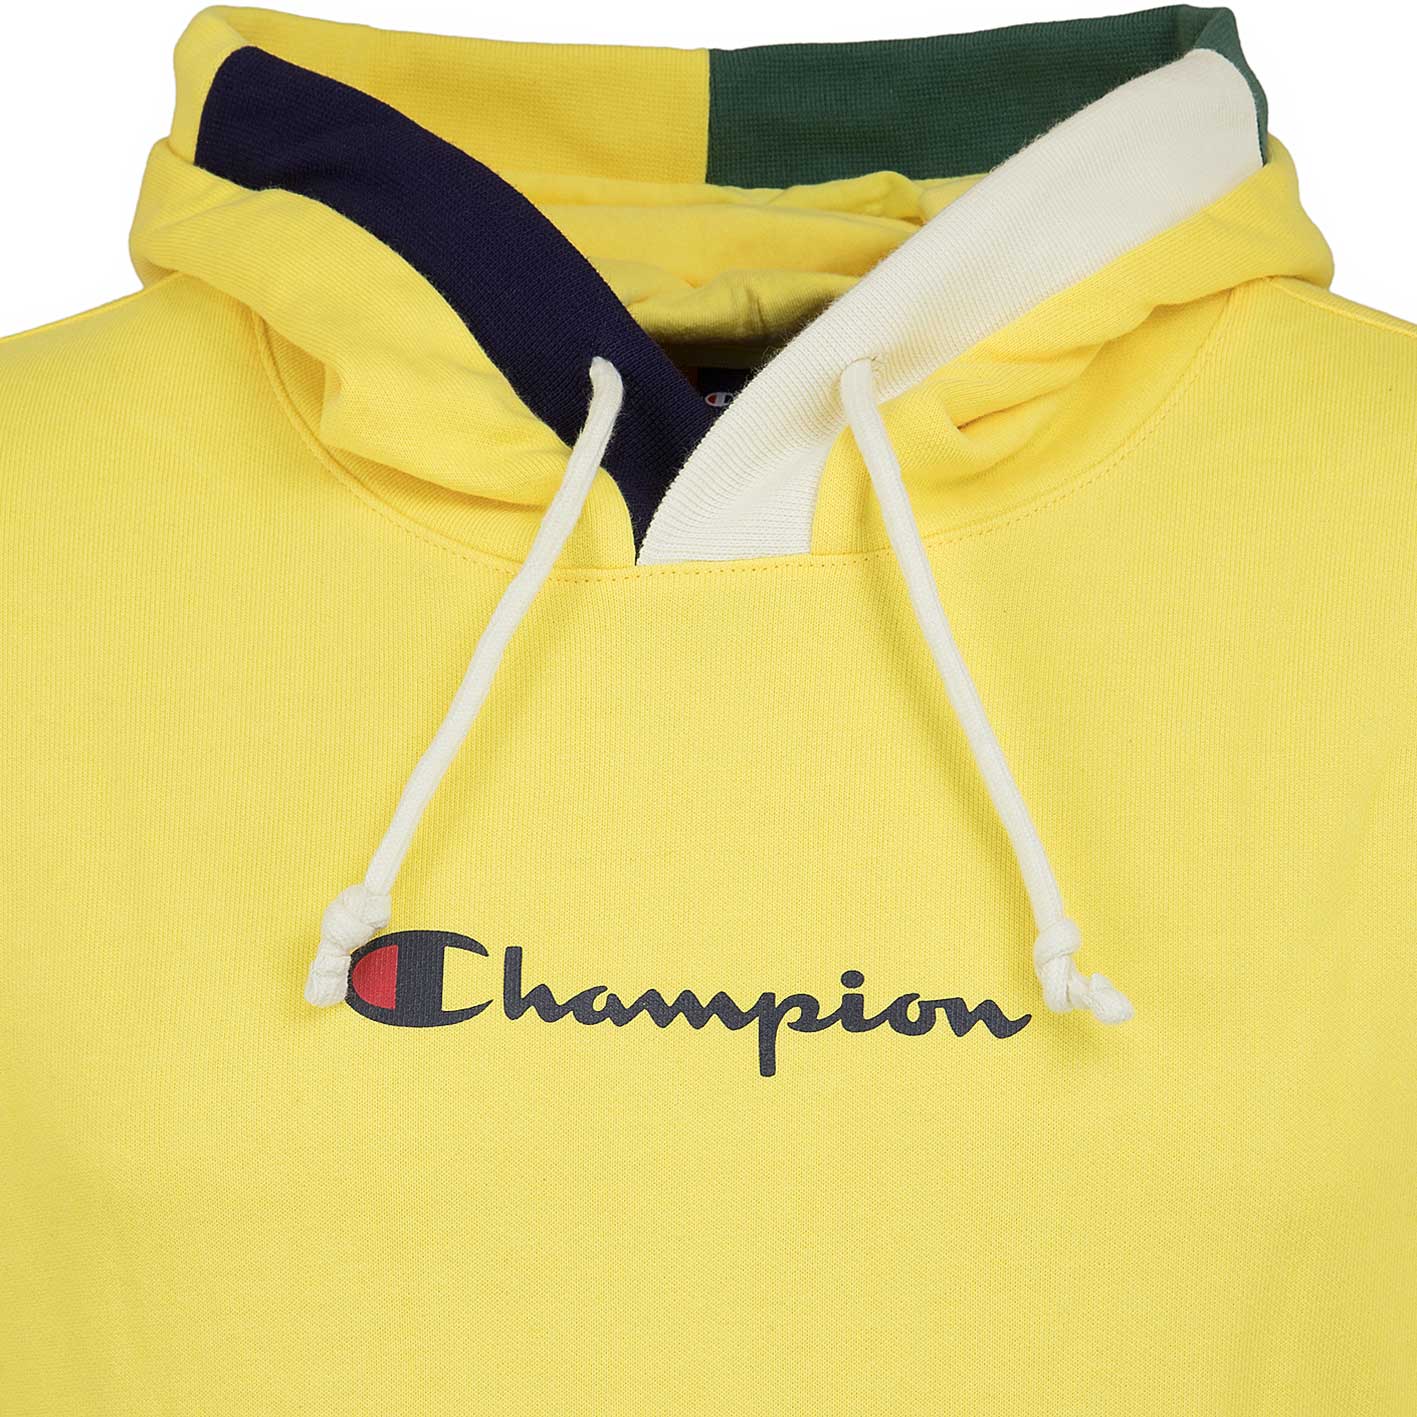 champion sweater geel geelbek,OFF 53%www.jtecrc.com